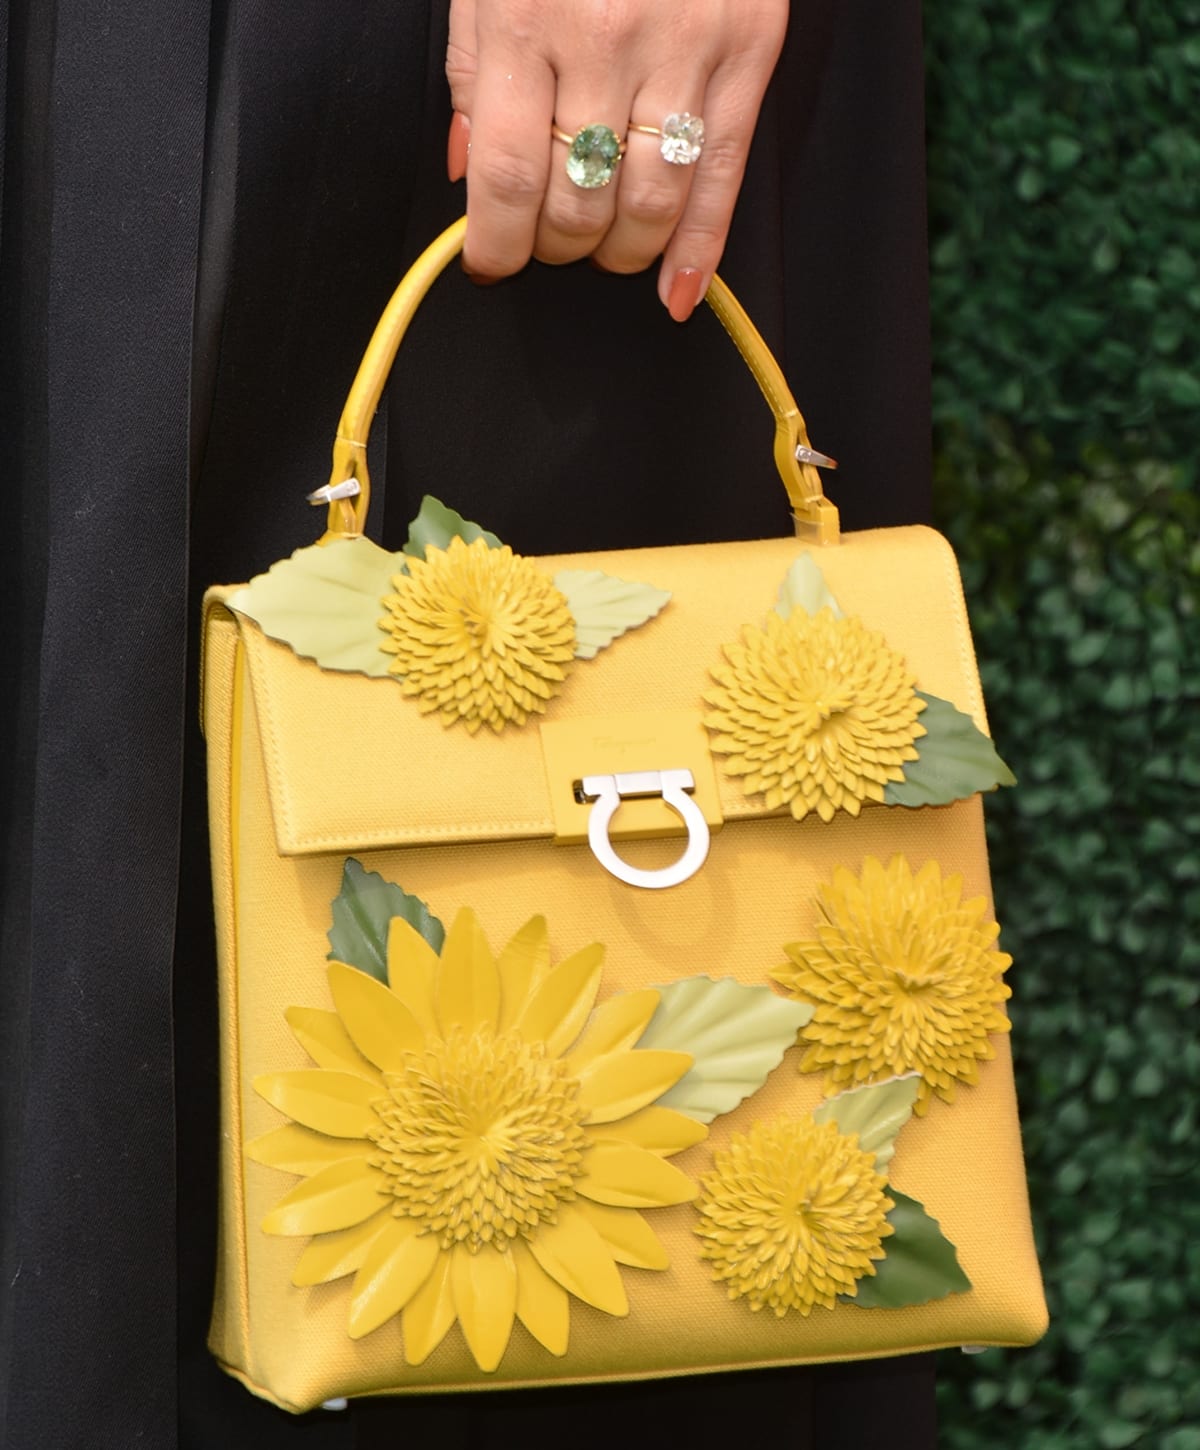 Sophia Bush shows off her Salvatore Ferragamo Sunflower bag and engagement ring